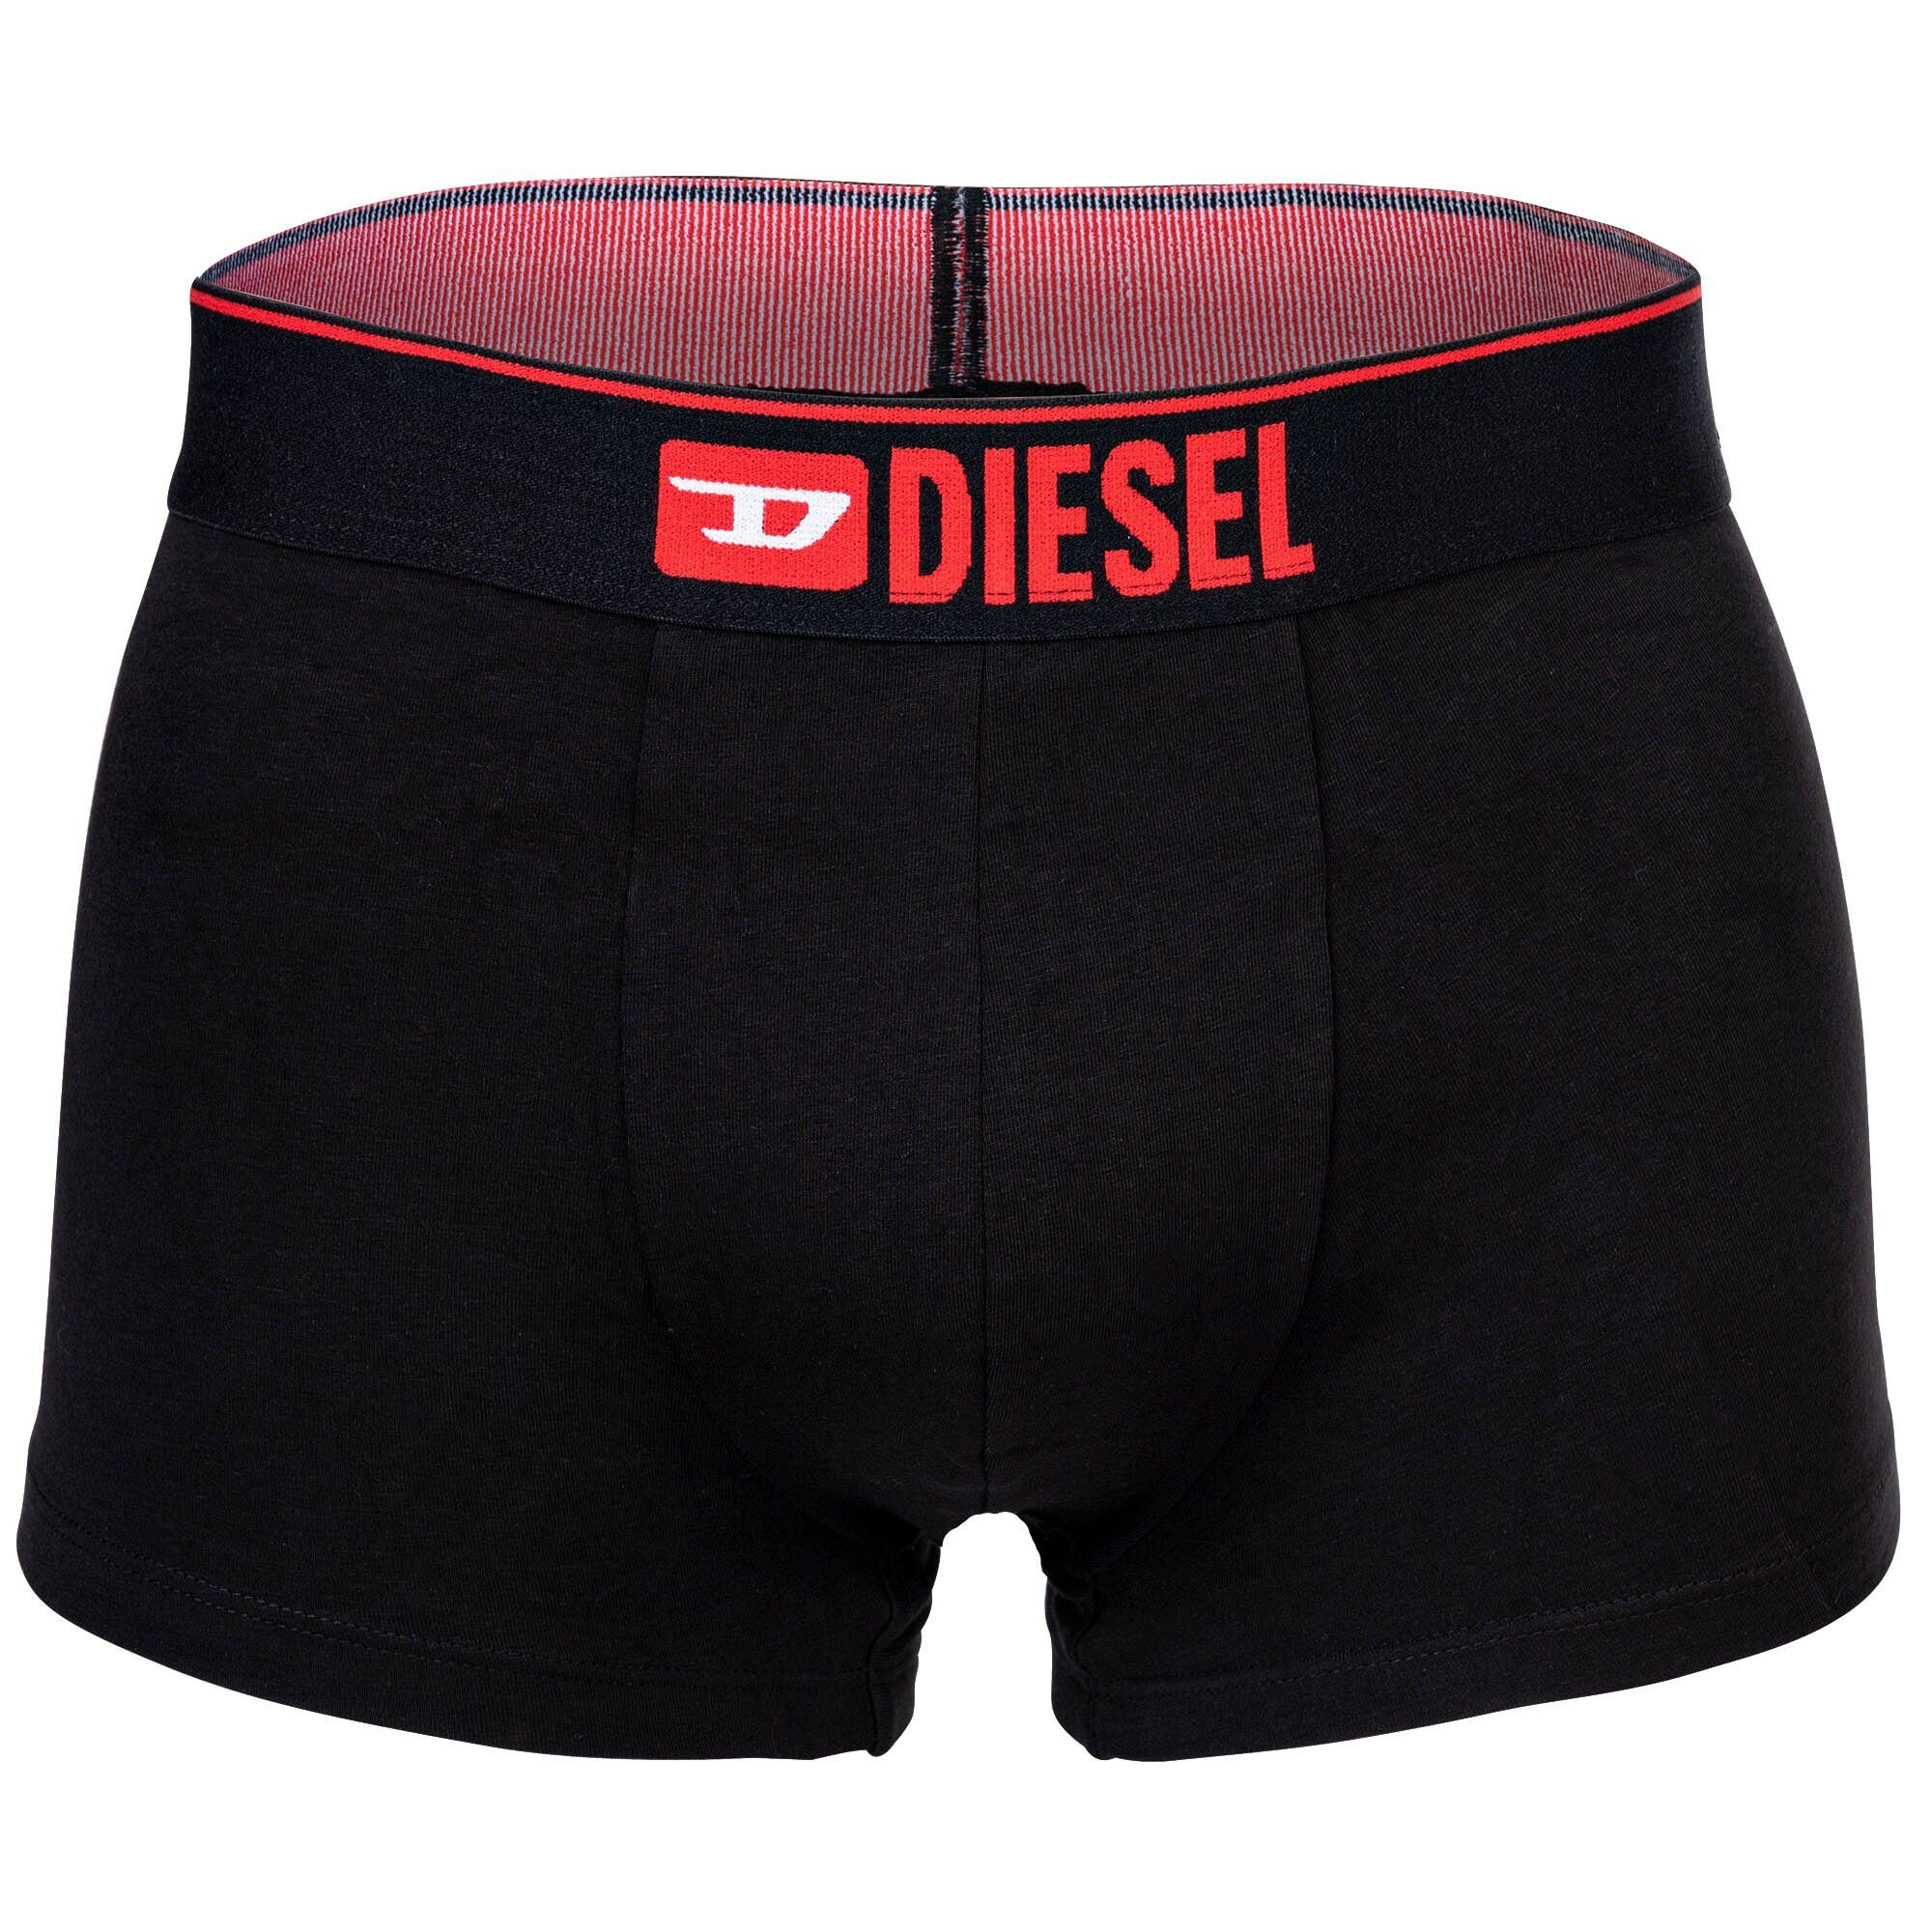 - Diesel Schwarz/Grau/Rot Boxershorts, 3er Pack Boxer Herren